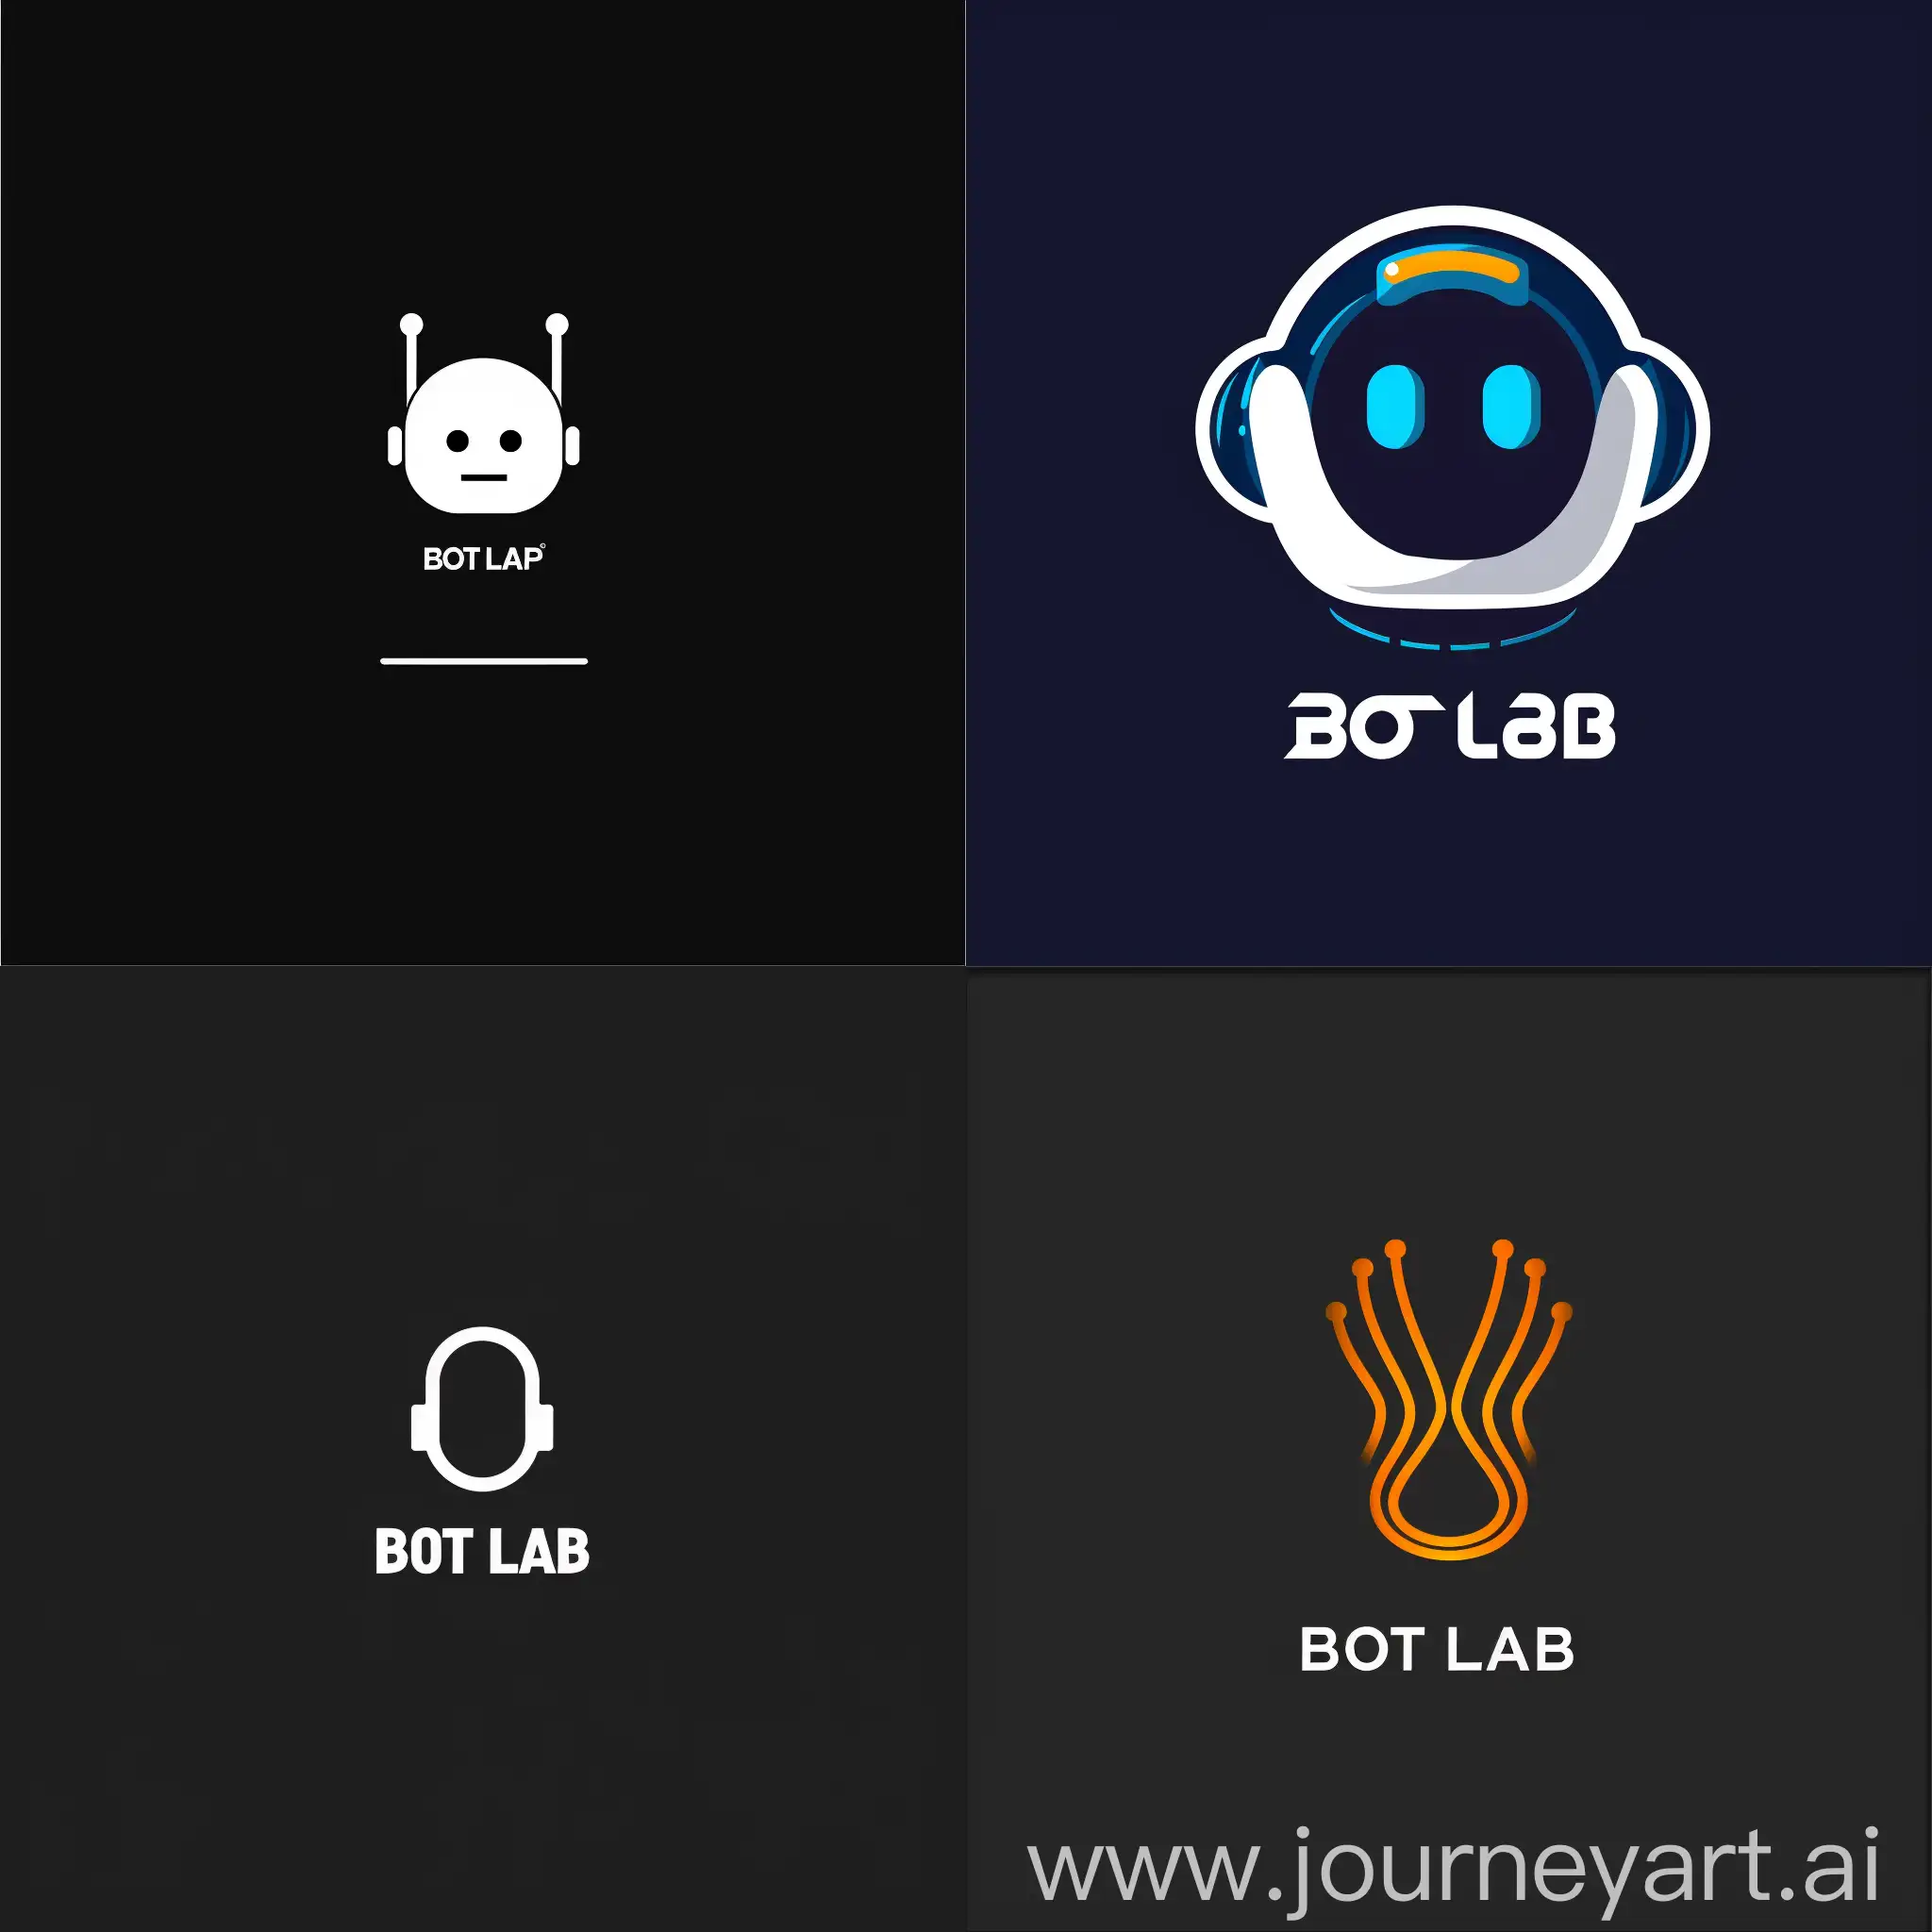 create logo - captcha service. Slogan "Bot Lab". Logo must be simple, minimalistic design